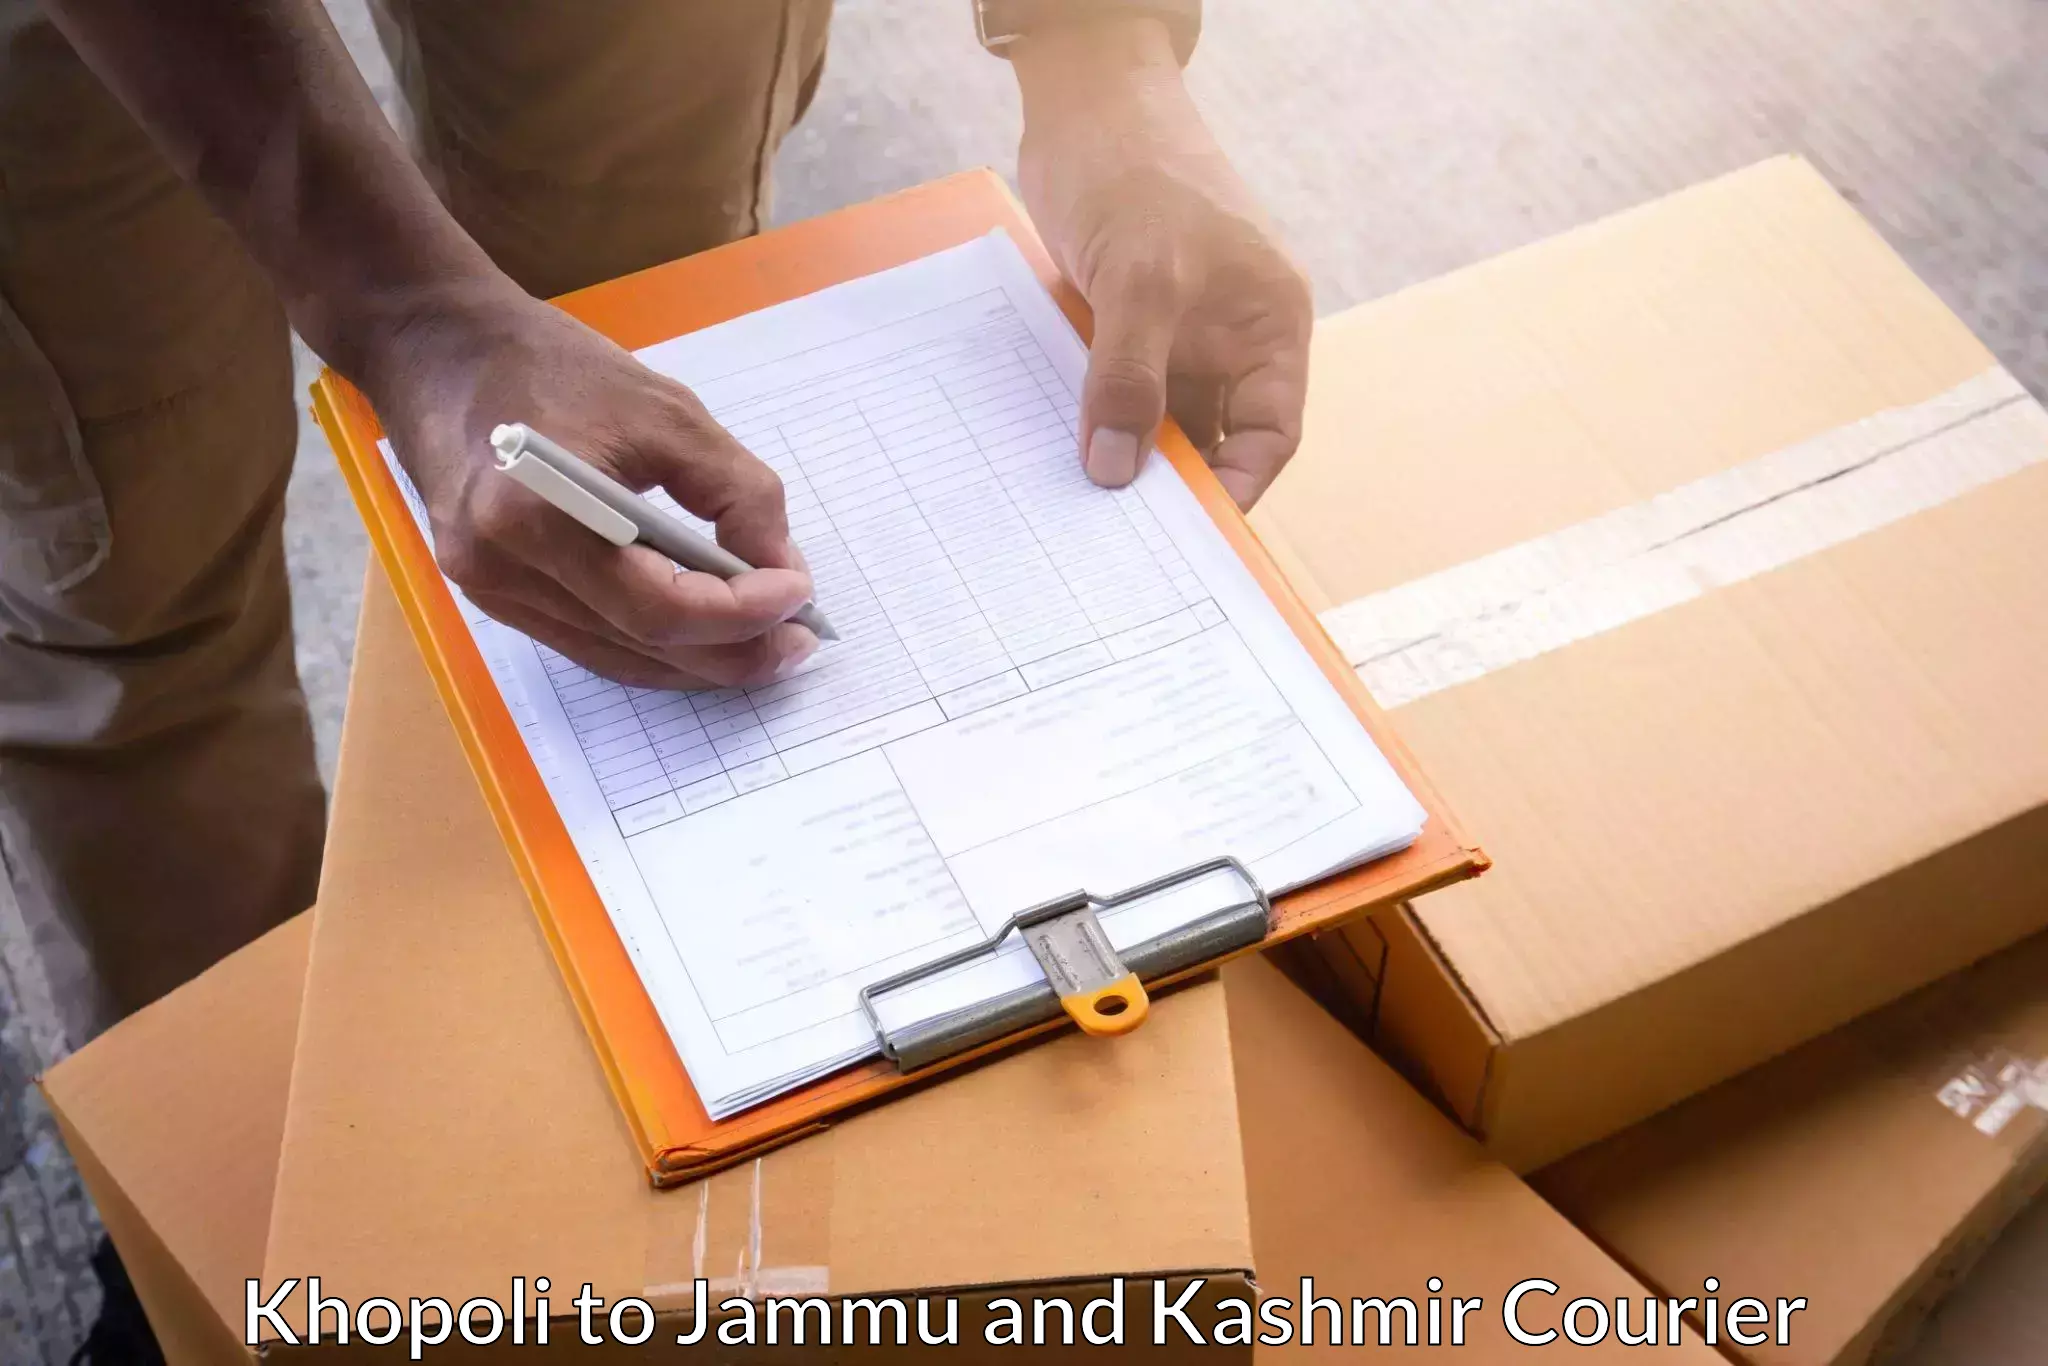 Express package handling Khopoli to Rajouri